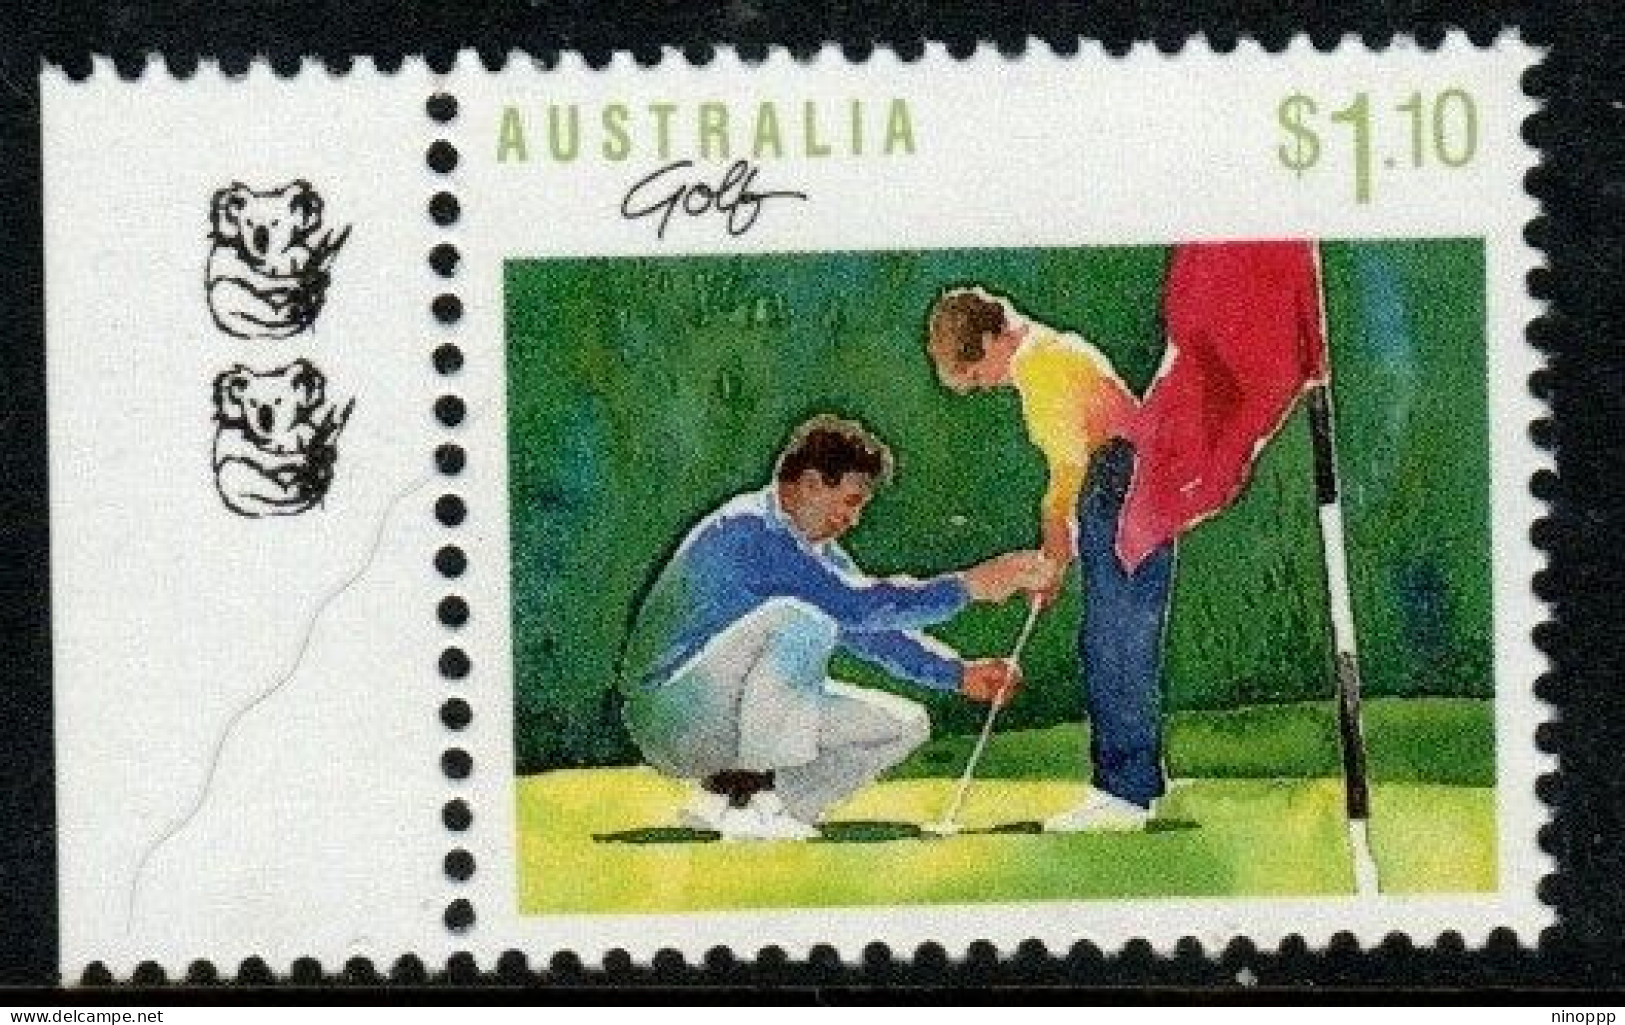 Australia Cat 1188a 1989 Sports $ 1.10 Golf, 2 Koalas Reprint,mint Never Hinged - Ensayos & Reimpresiones